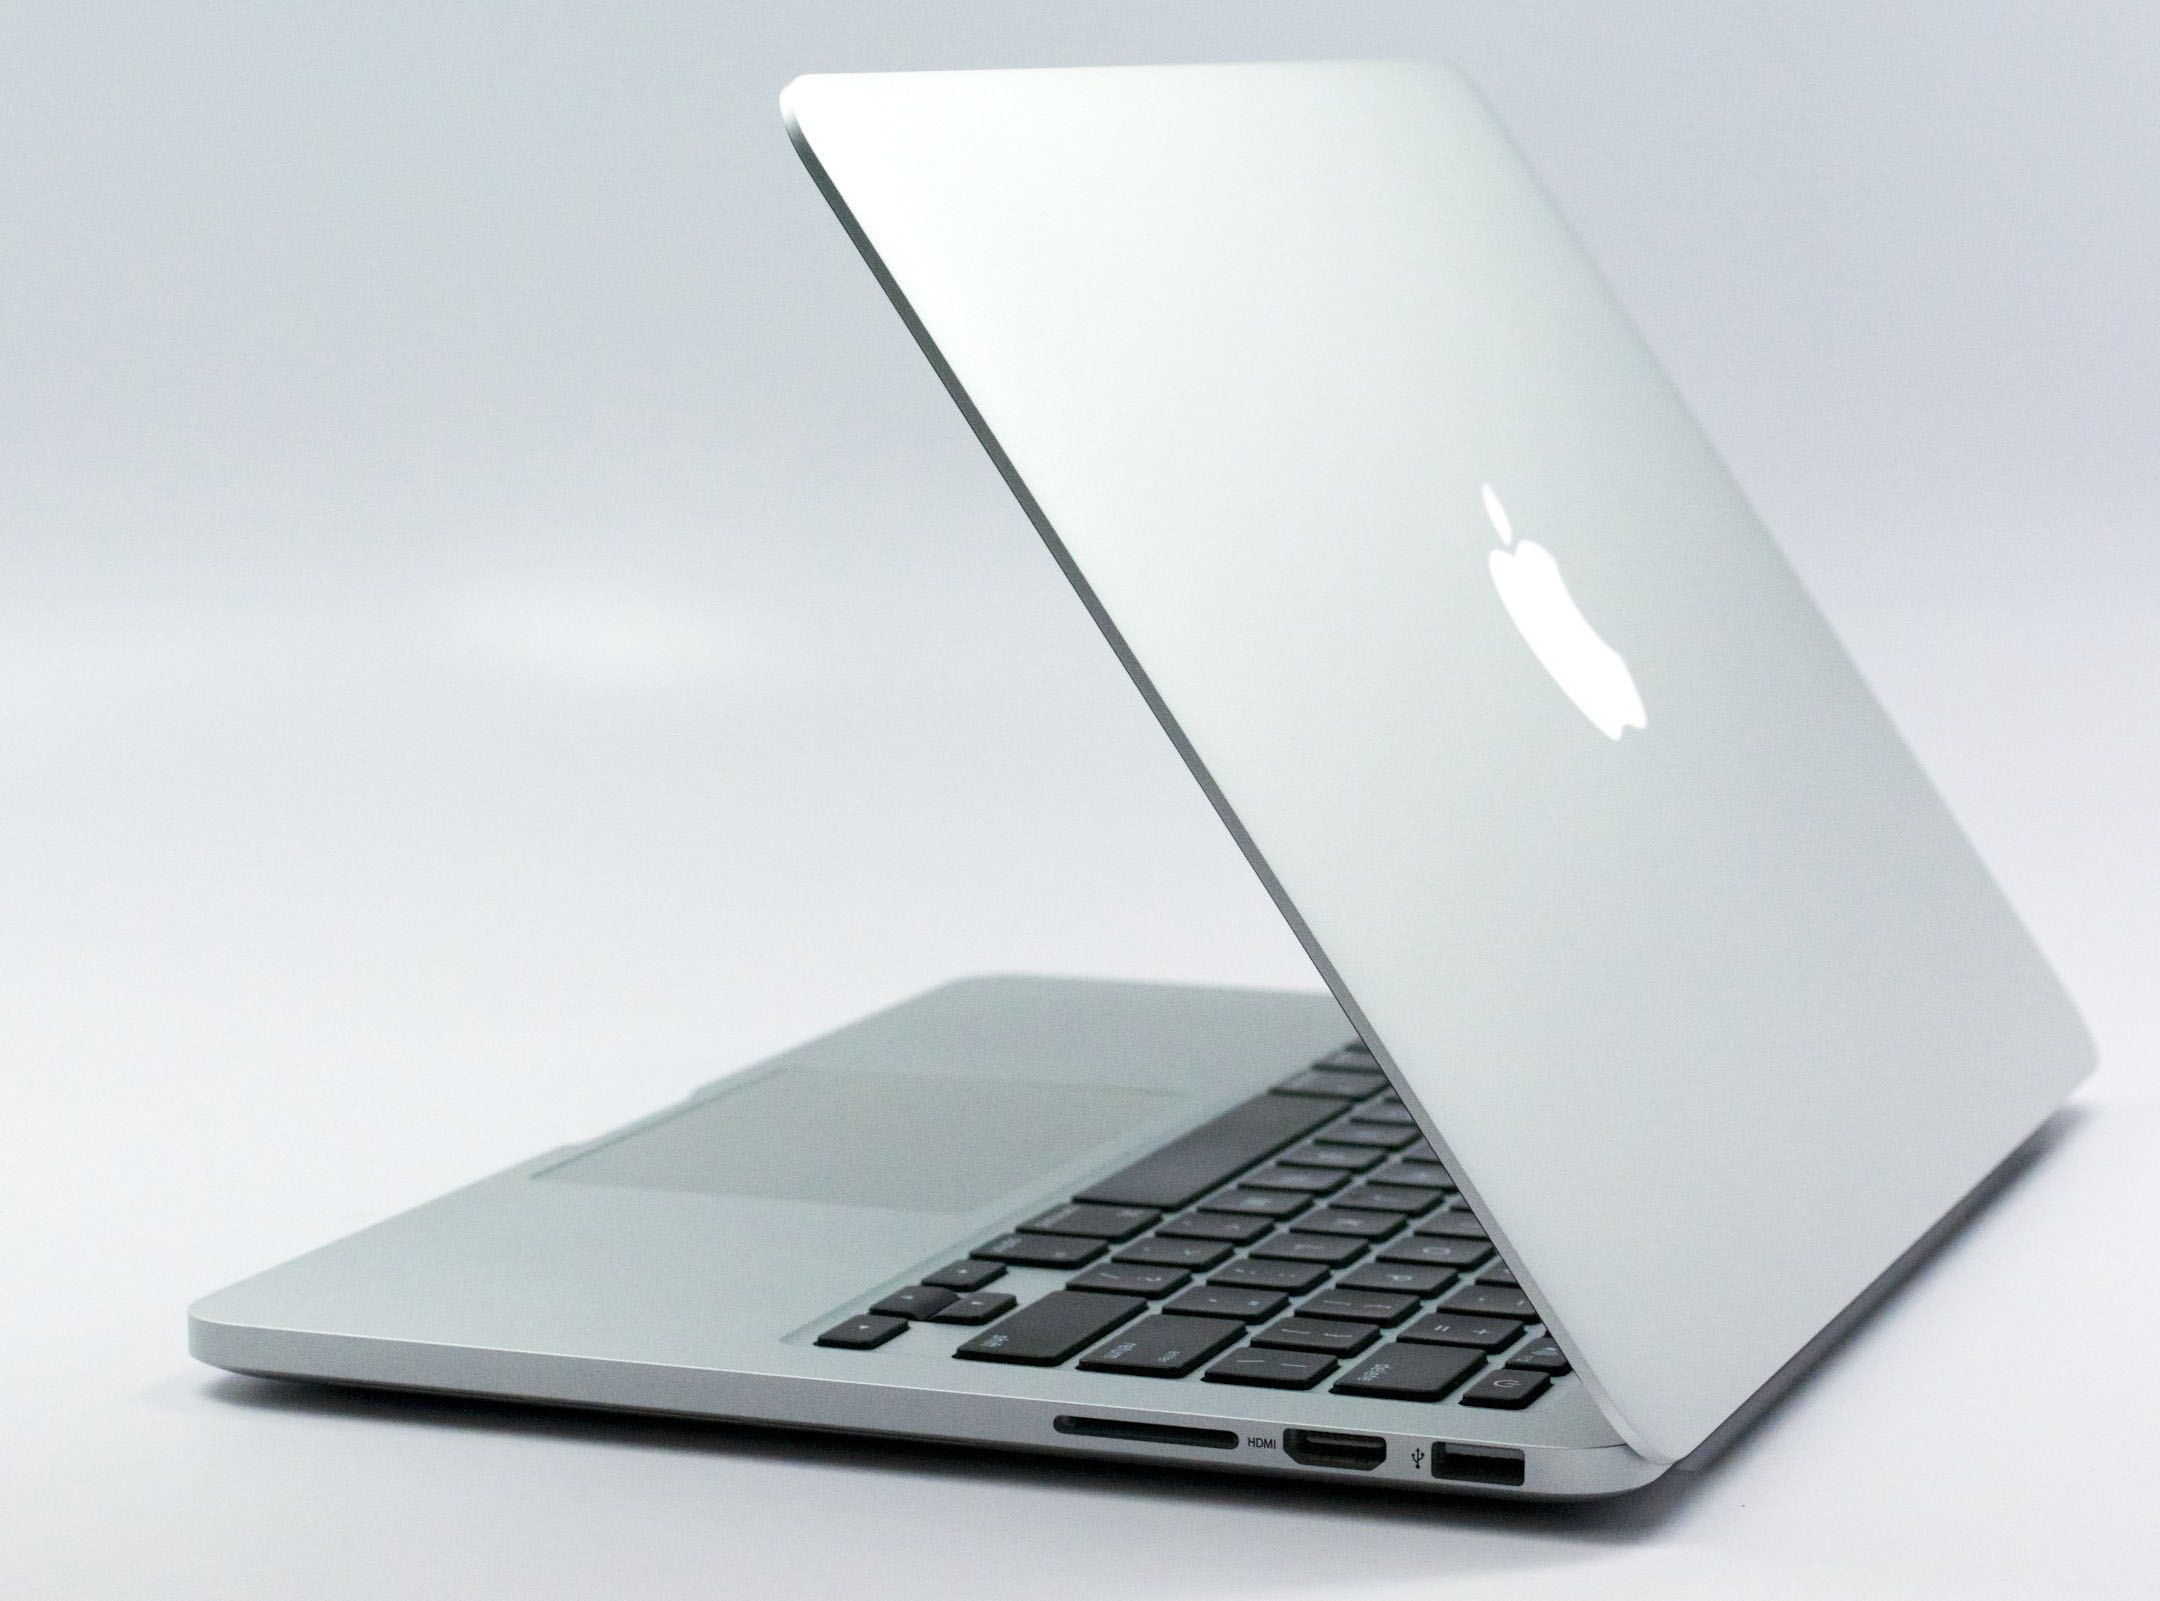 MacBook  pro 13.3 late 2013 4g128g i5